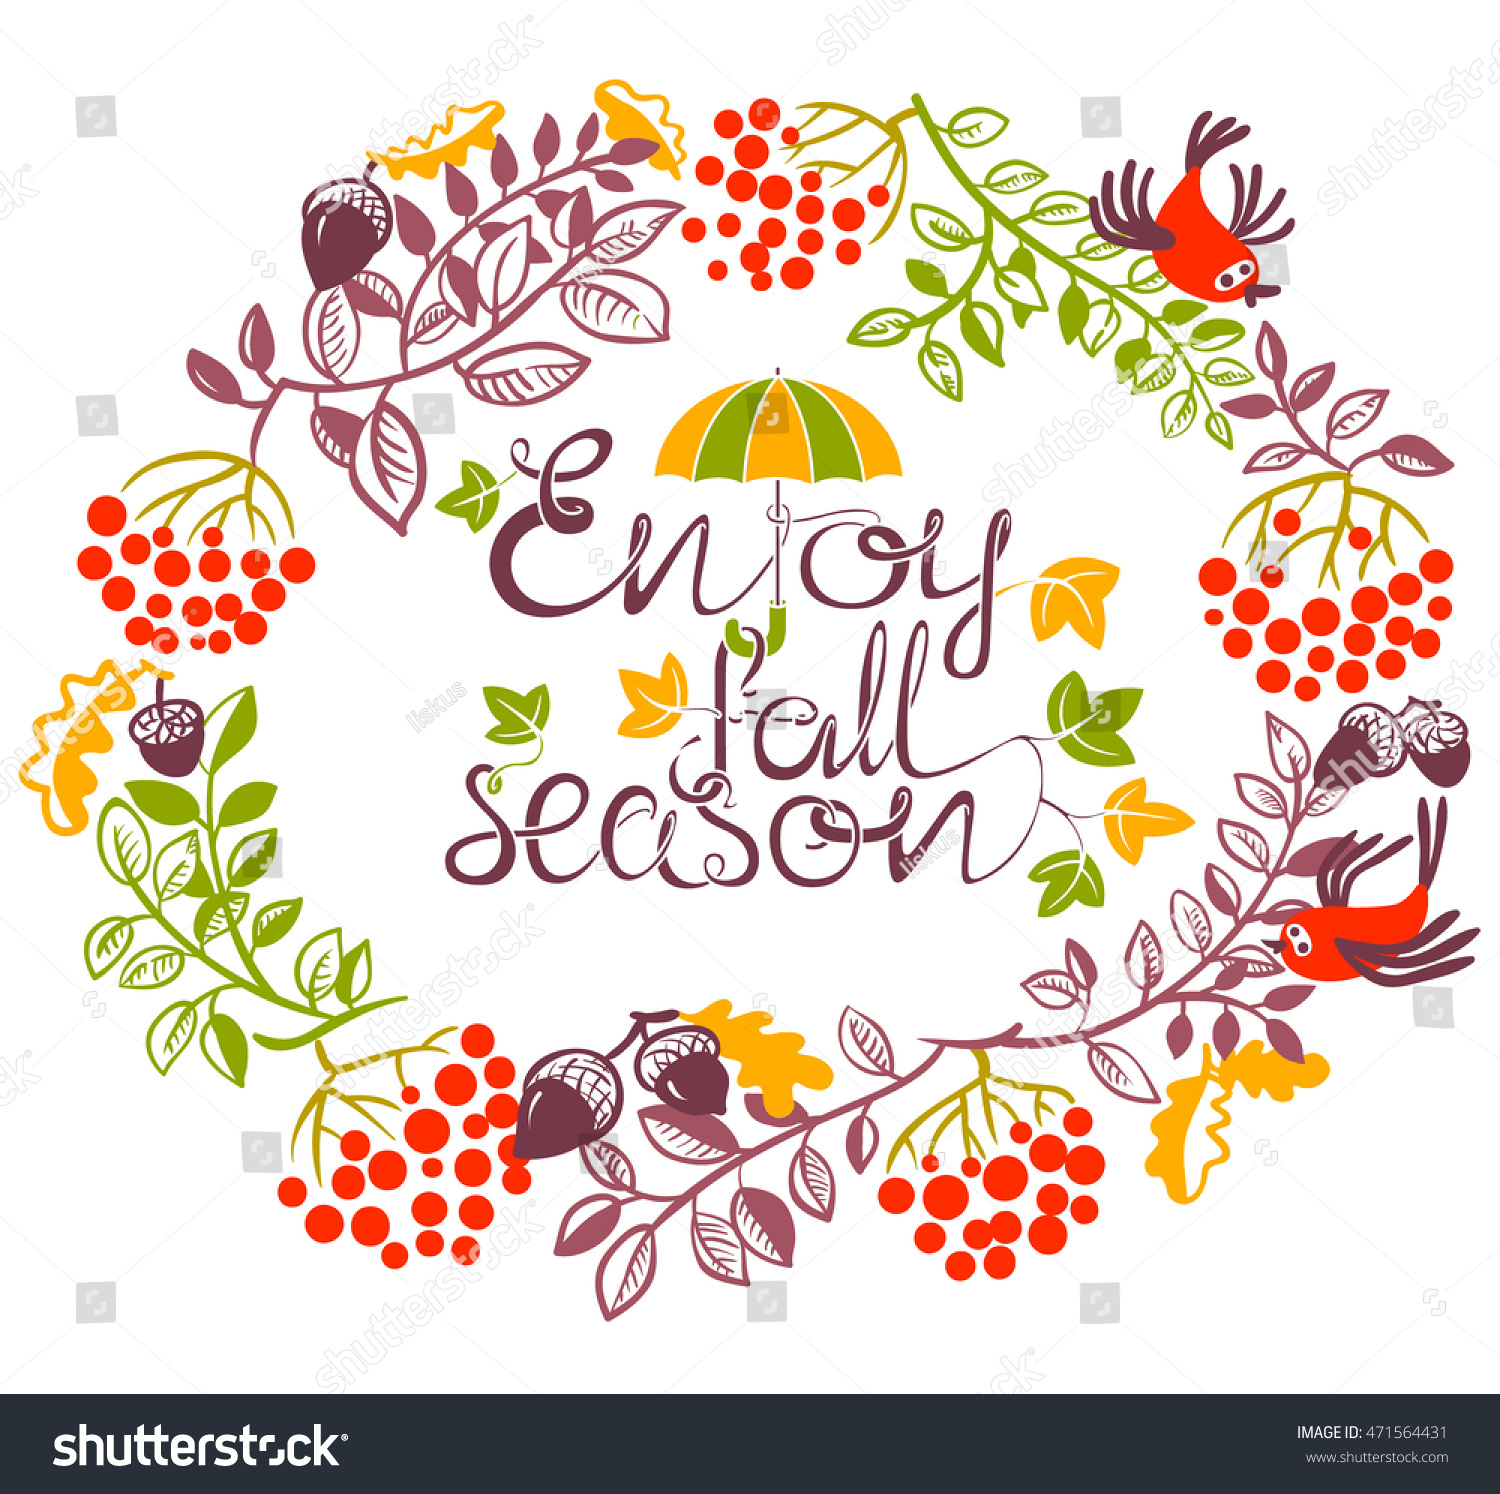 Enjoy Fall Season Hand Drawing Lettering Stock Vector 471564431 ...